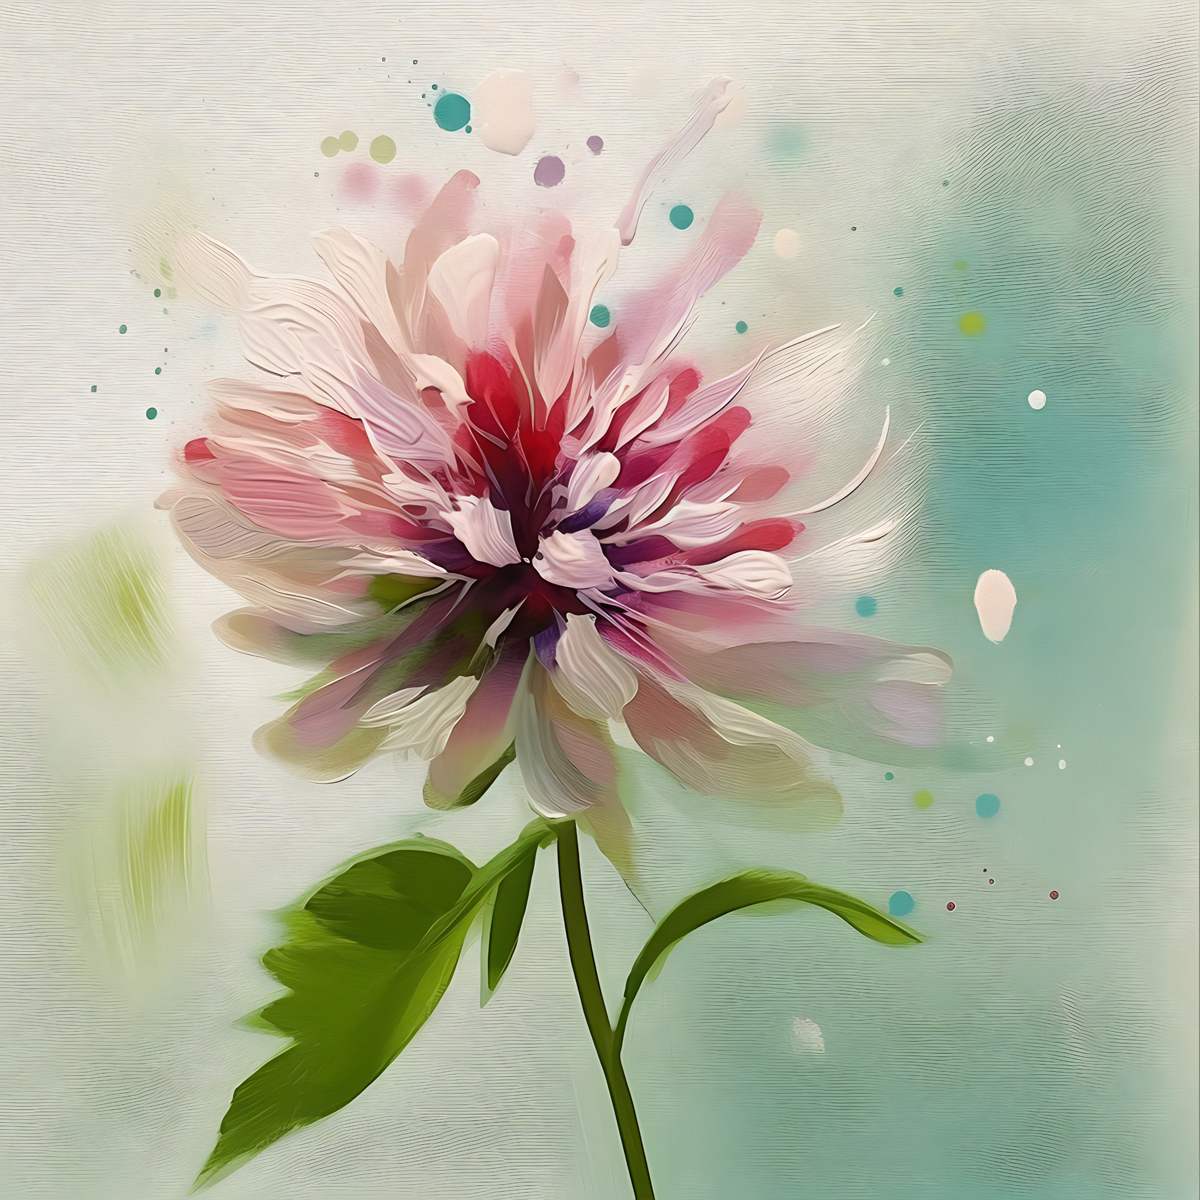  Nature's Palette: 'Pink Flower' Art Collection - Art Print on Canvas. Artemyst